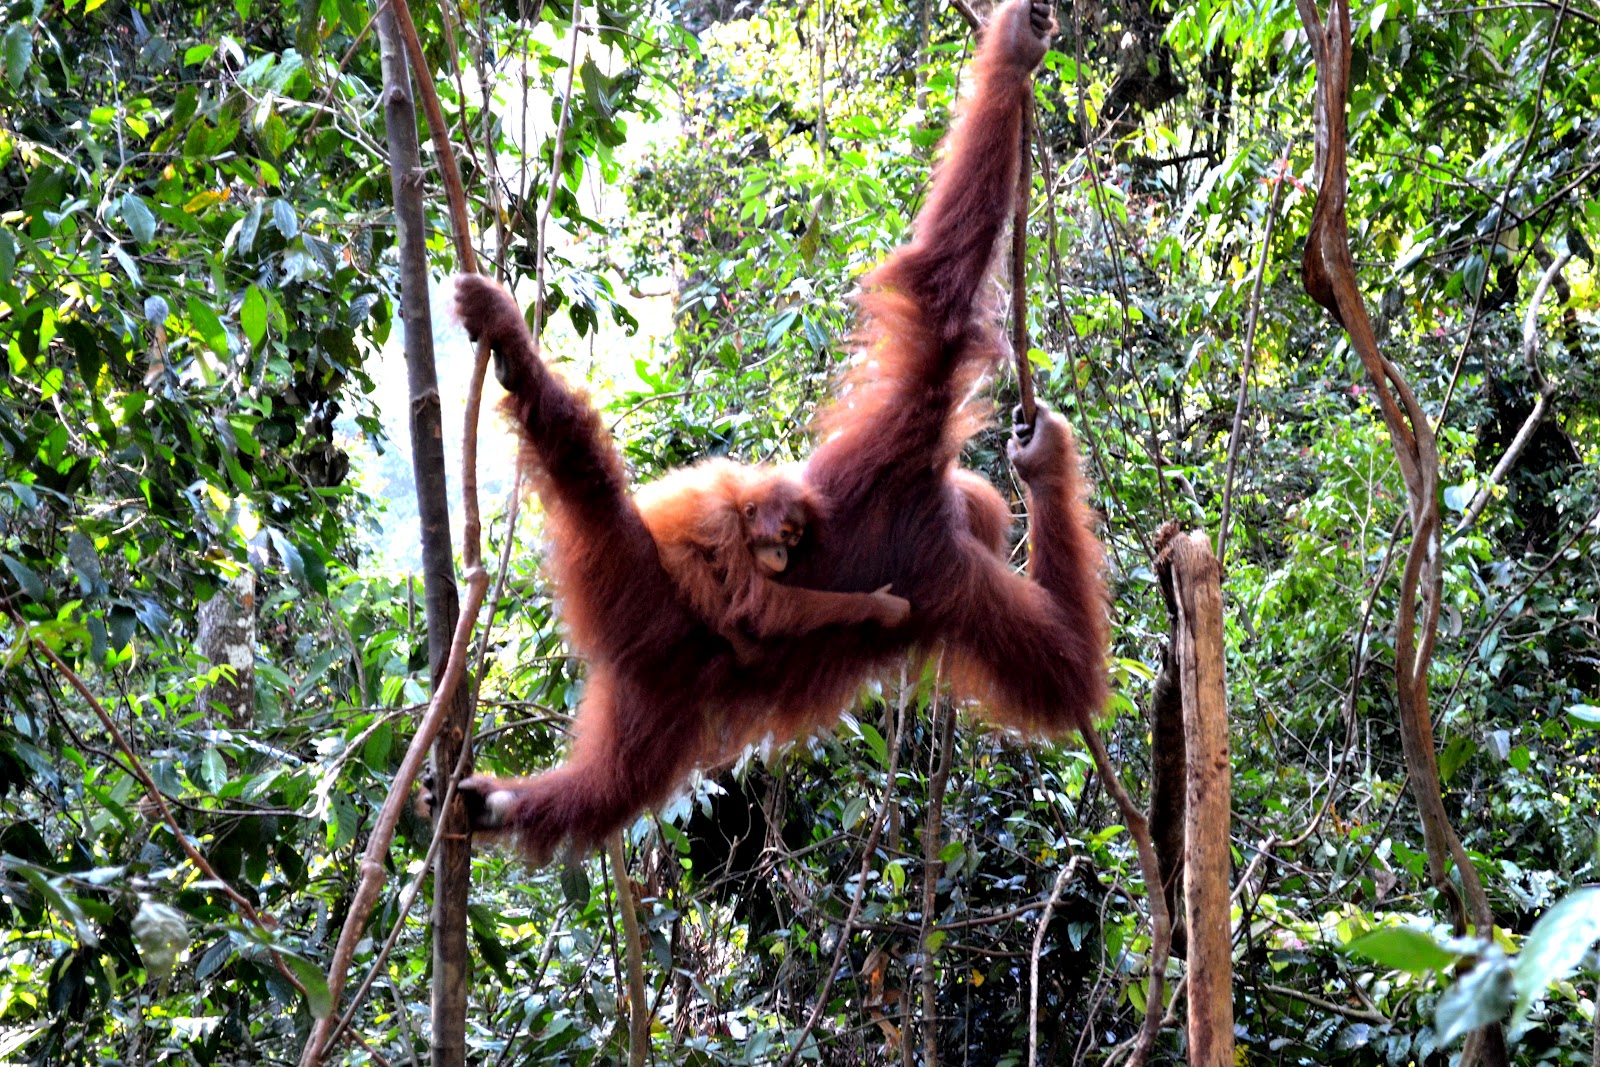 Download this Bukit Lawang Orangutan Feeding Center picture